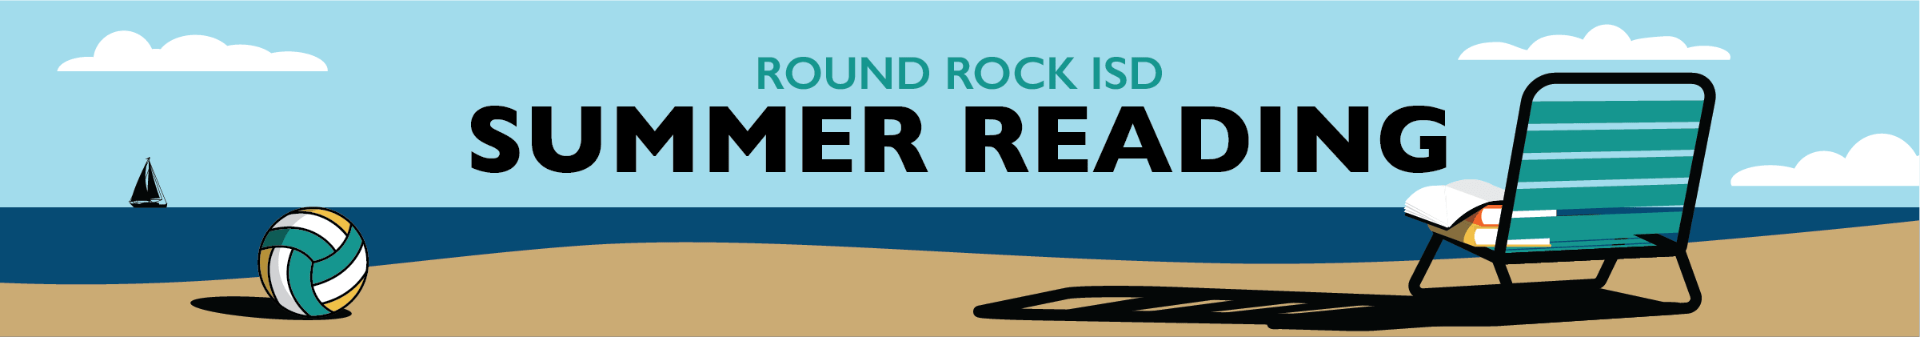 Round Rock ISD Summer Reading